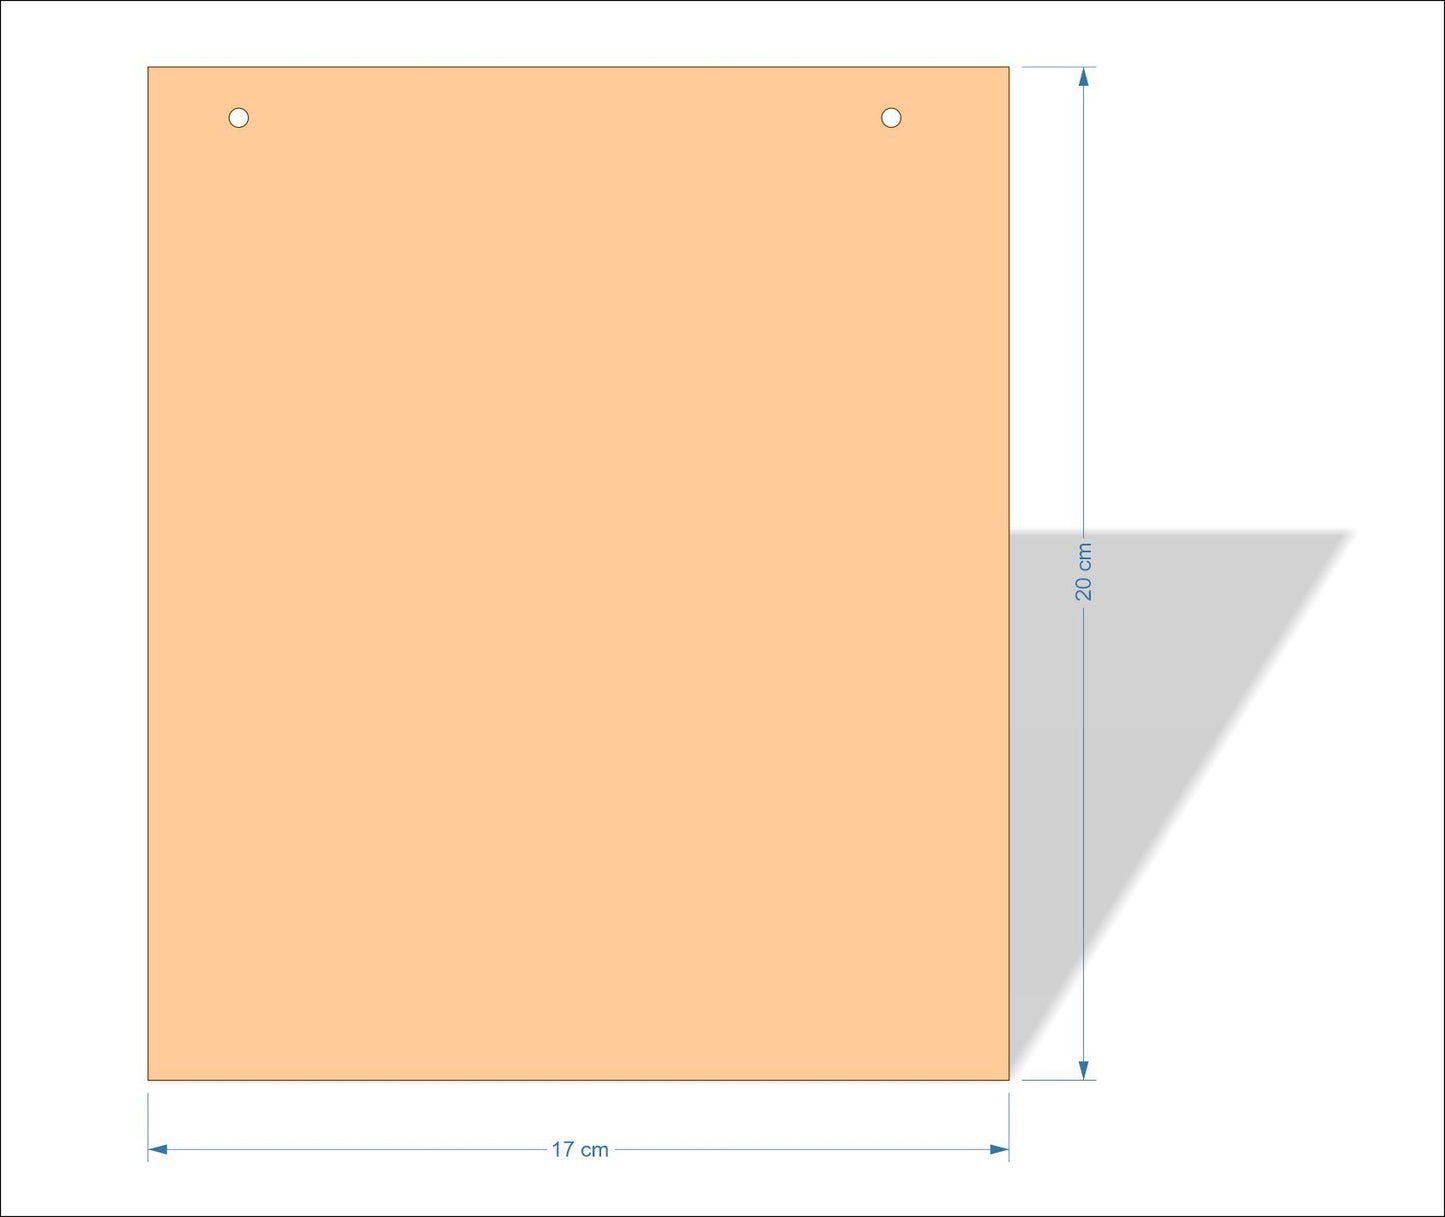 17 cm X 20 cm 3mm MDF Plaques with square corners